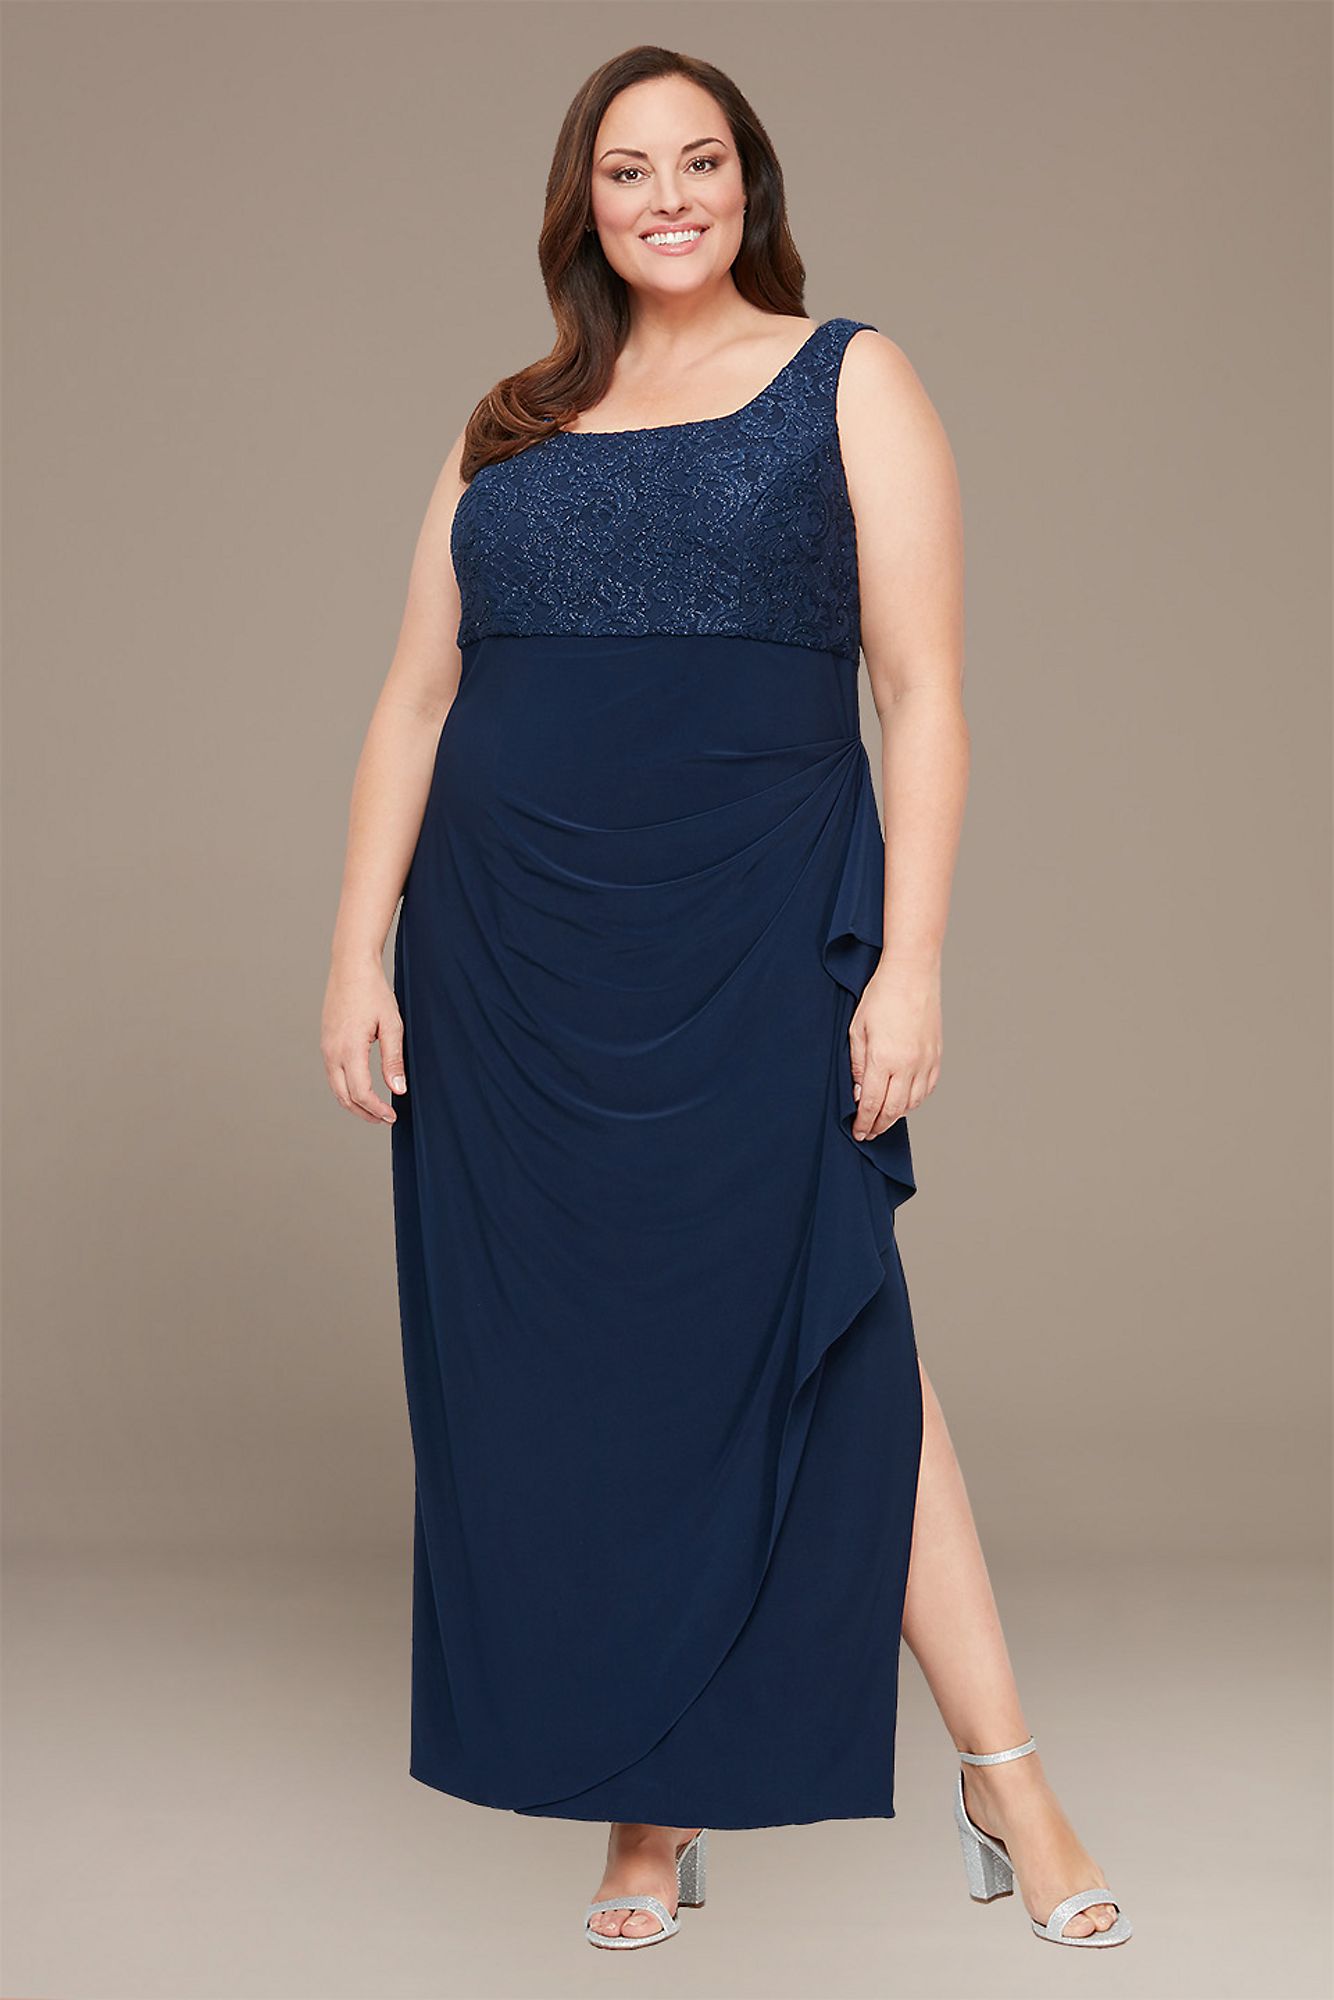 Plus Size Empire Waist Lace Dress with Open Jacket Alex Evenings 84122475